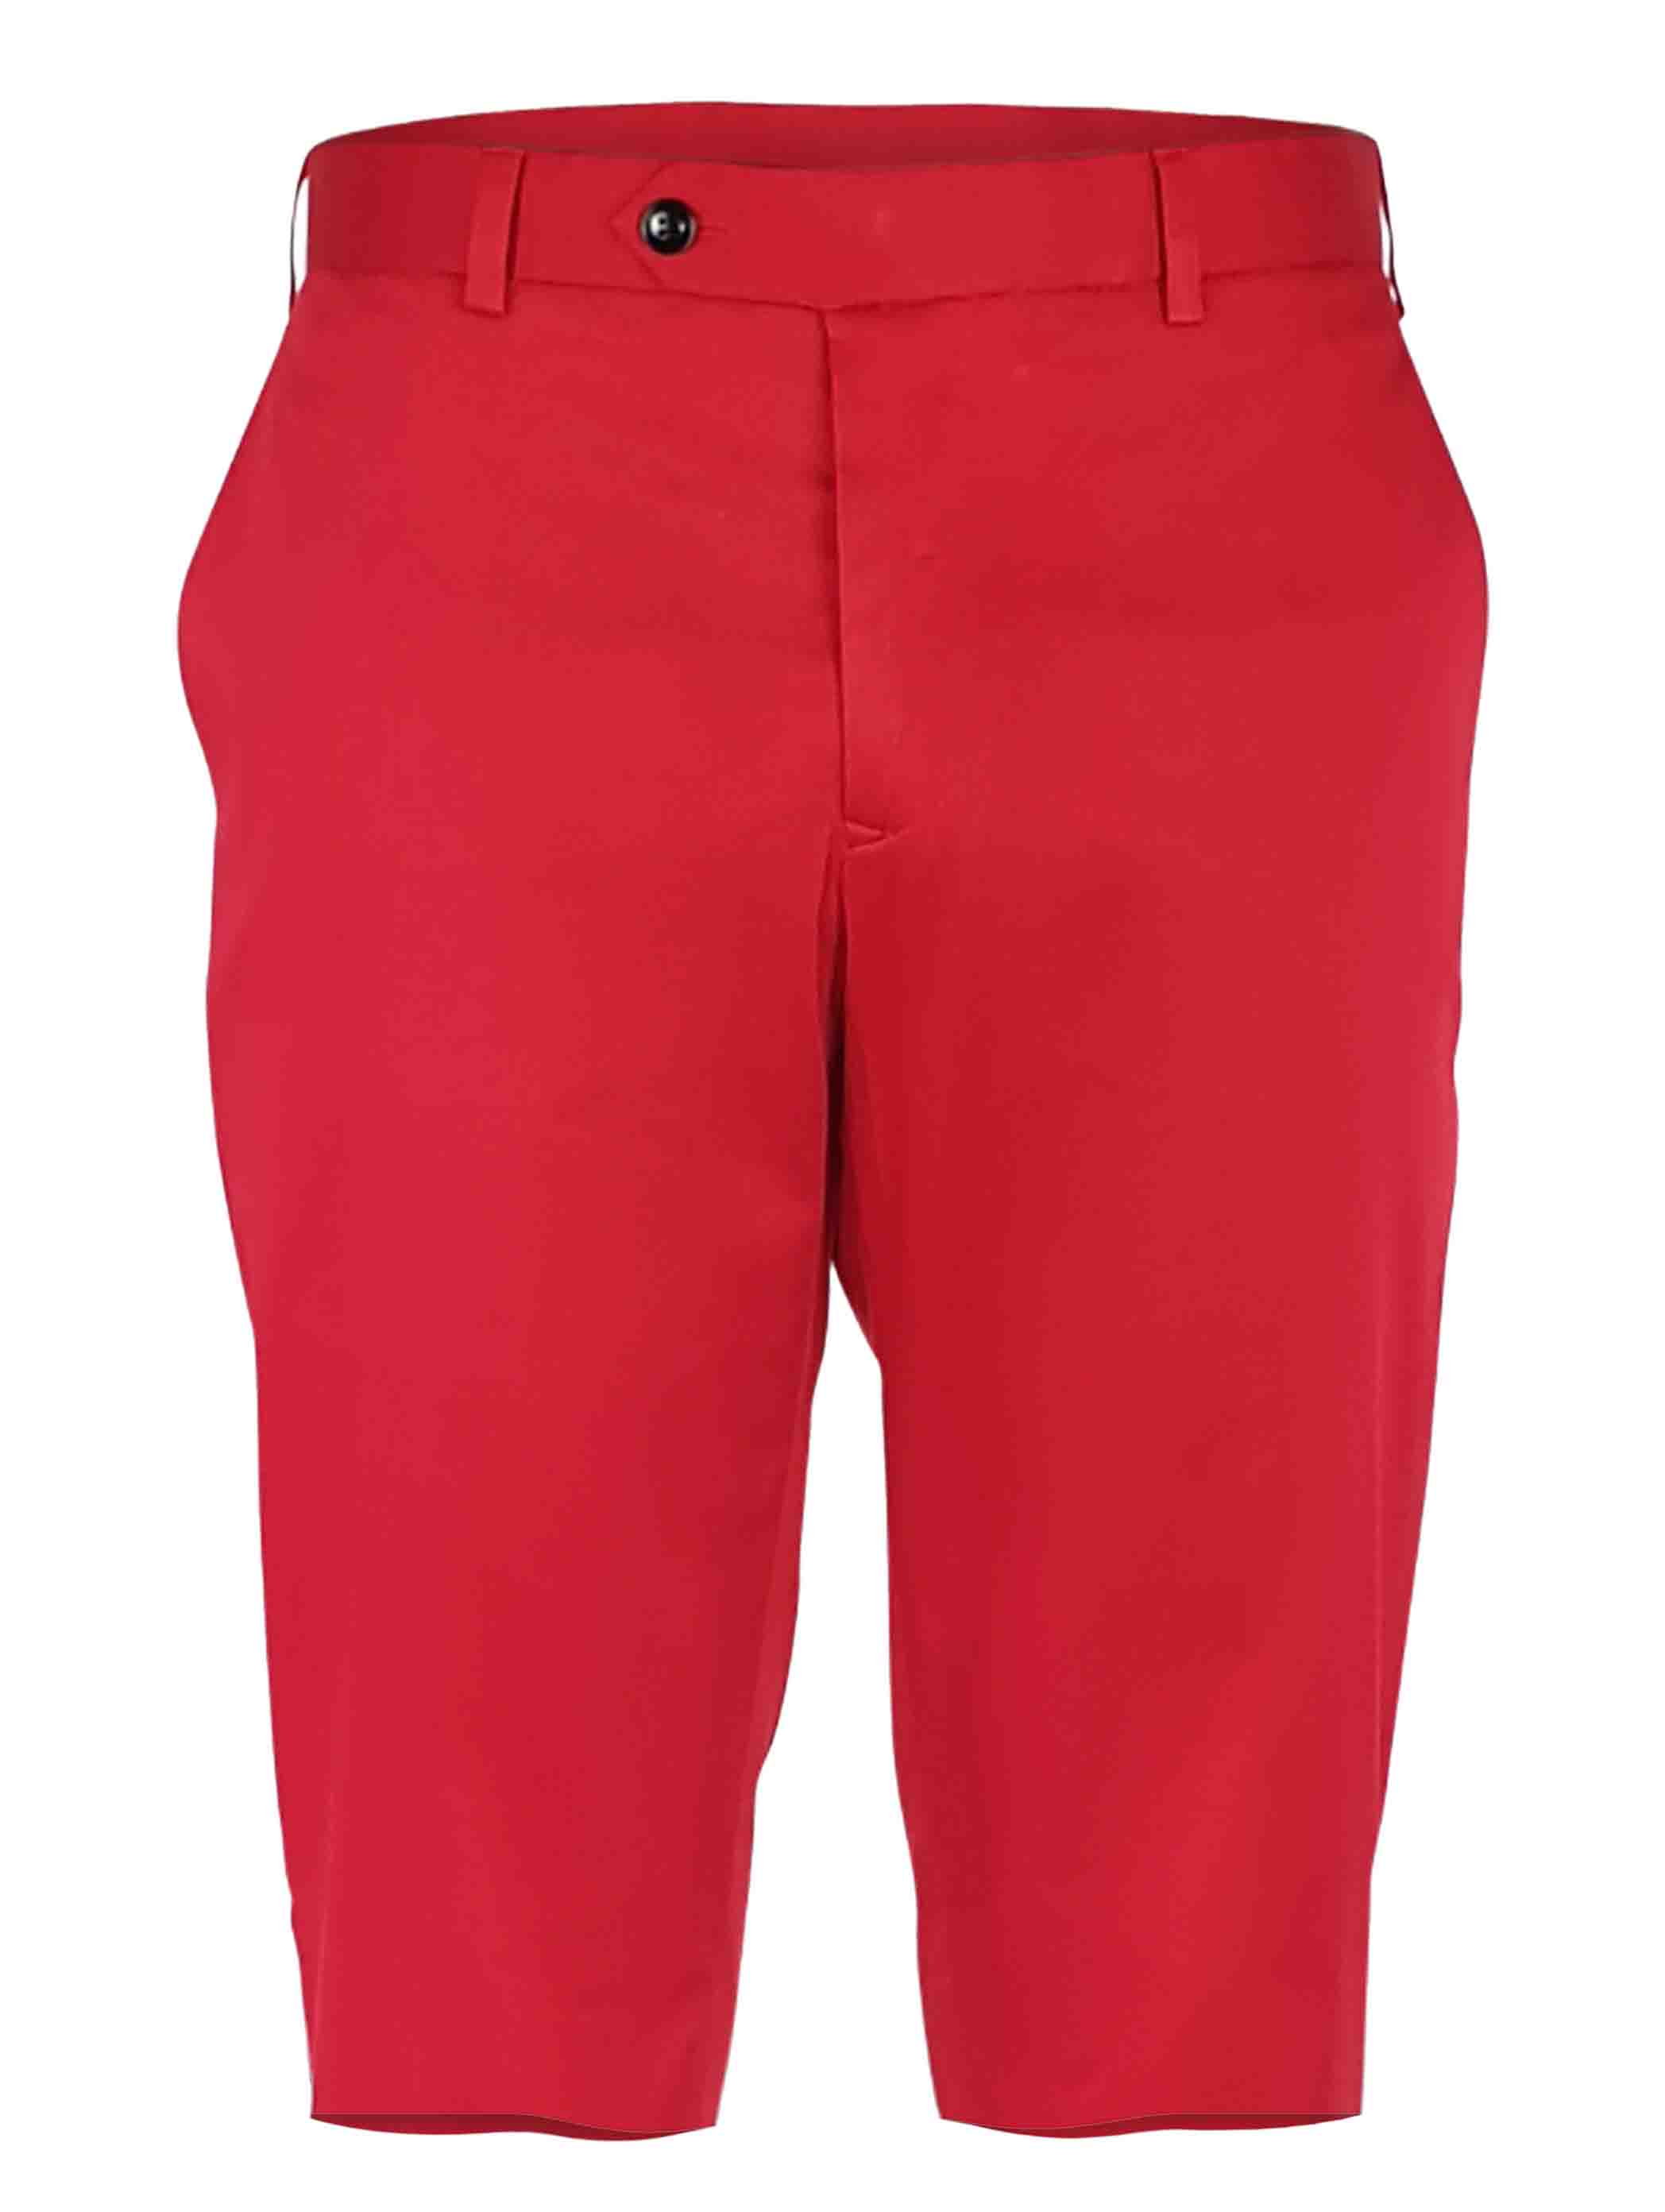 Men's Shorts - Red - Uniform Edit